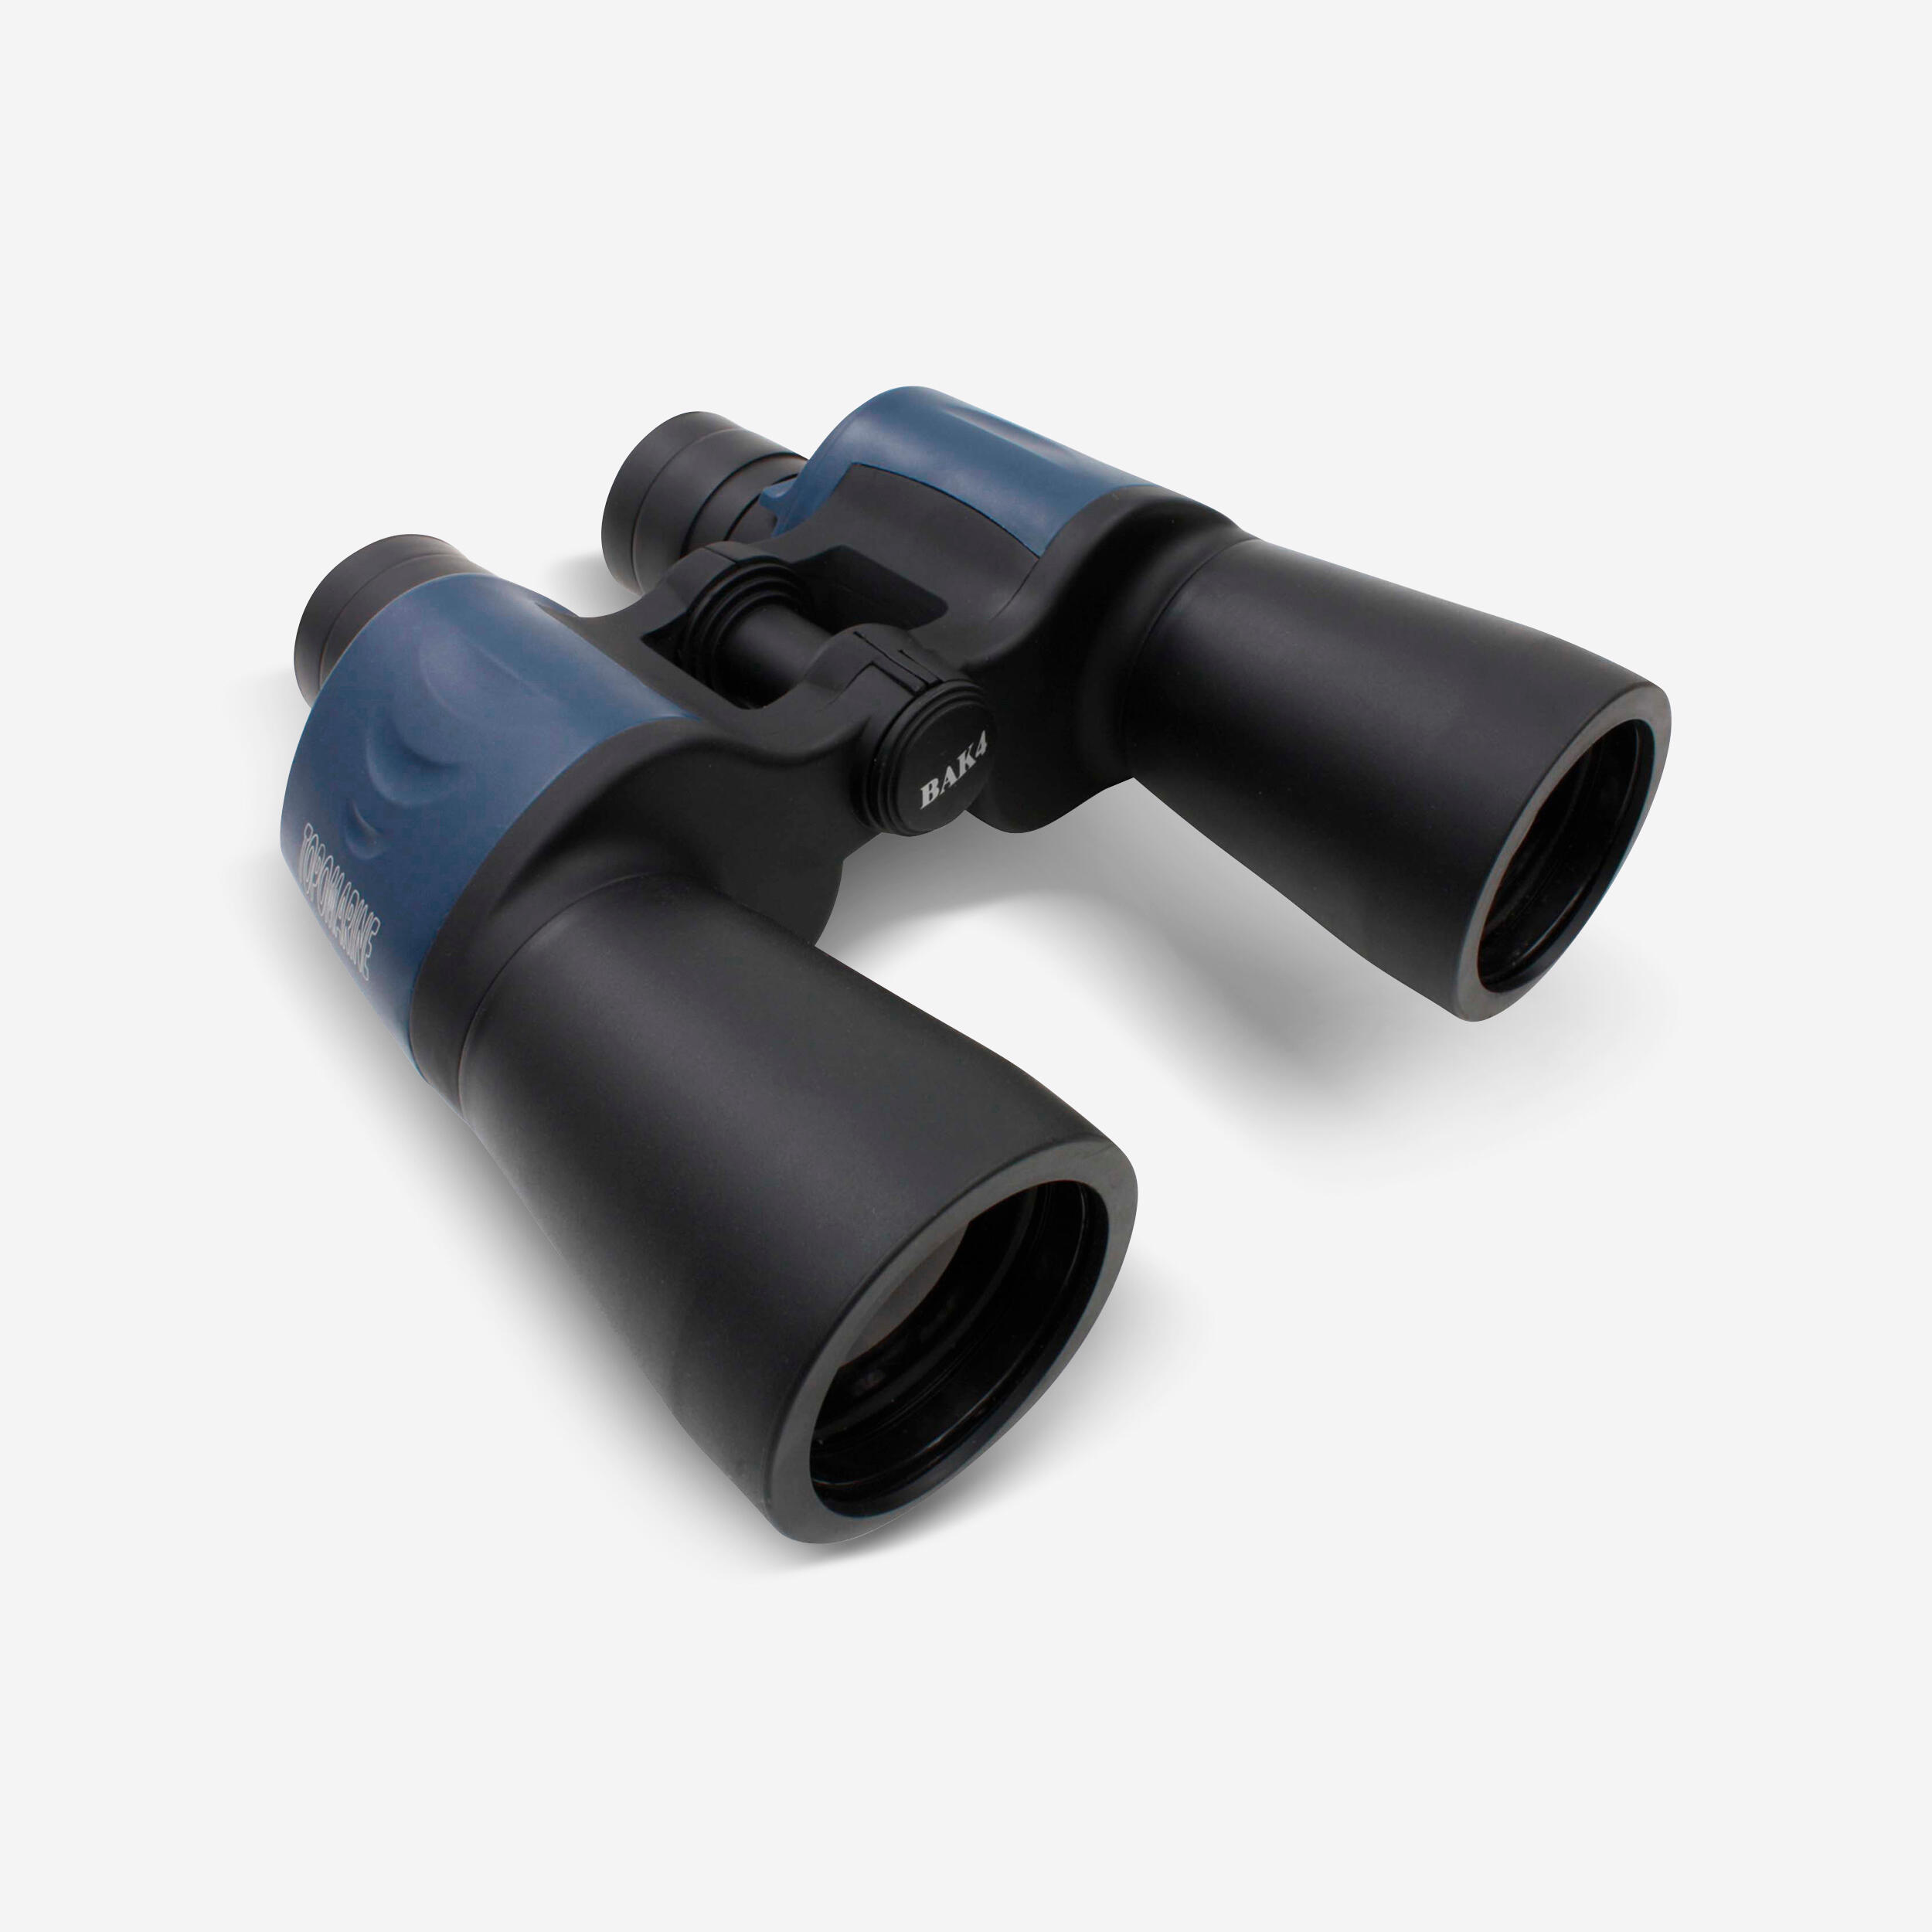 Waterproof binoculars 7x50 1/5